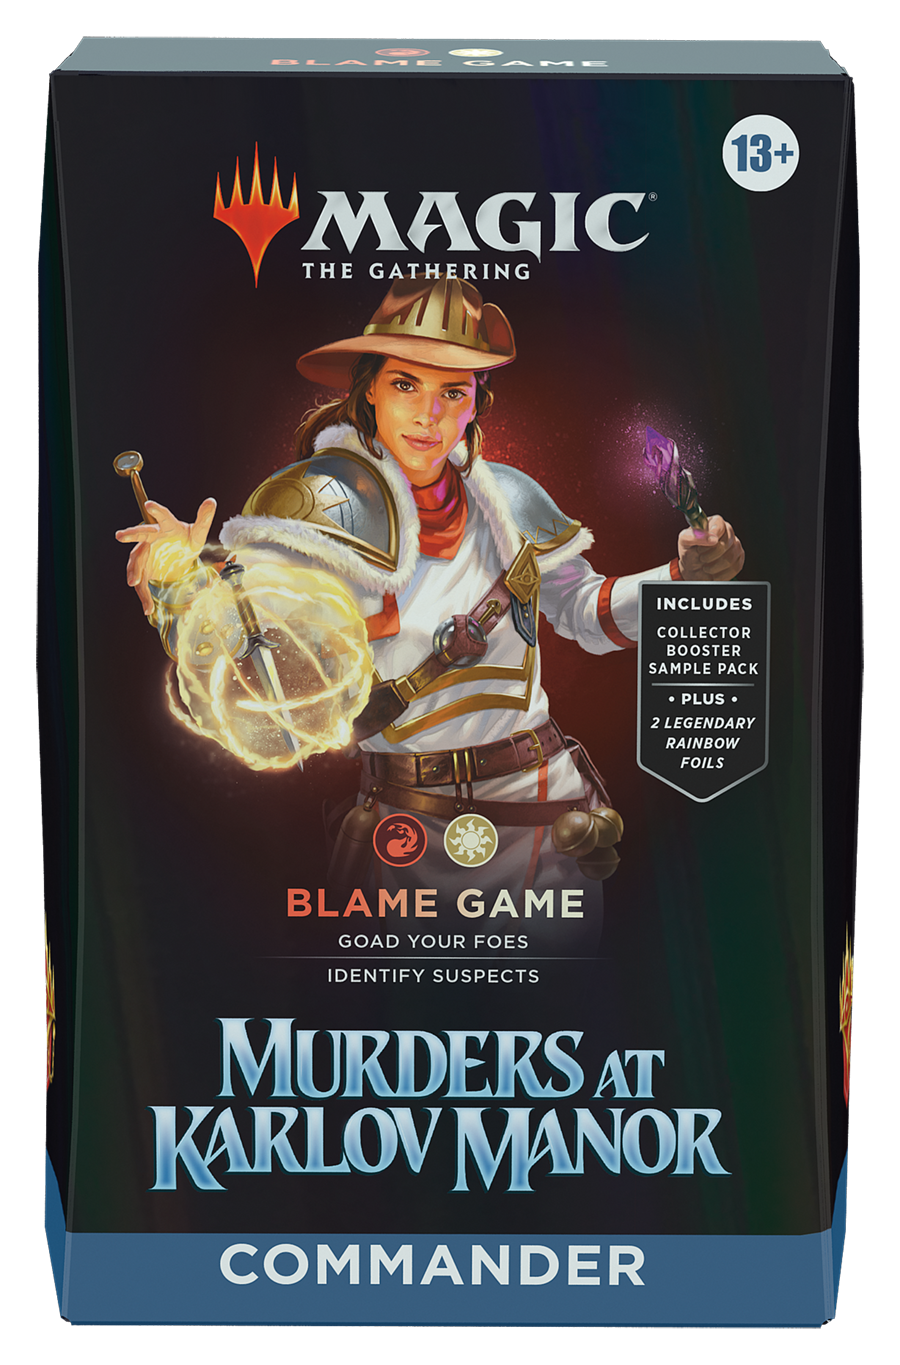 Magic the Gathering Murders at Karlov Manor Commander Precon:  Blame Game